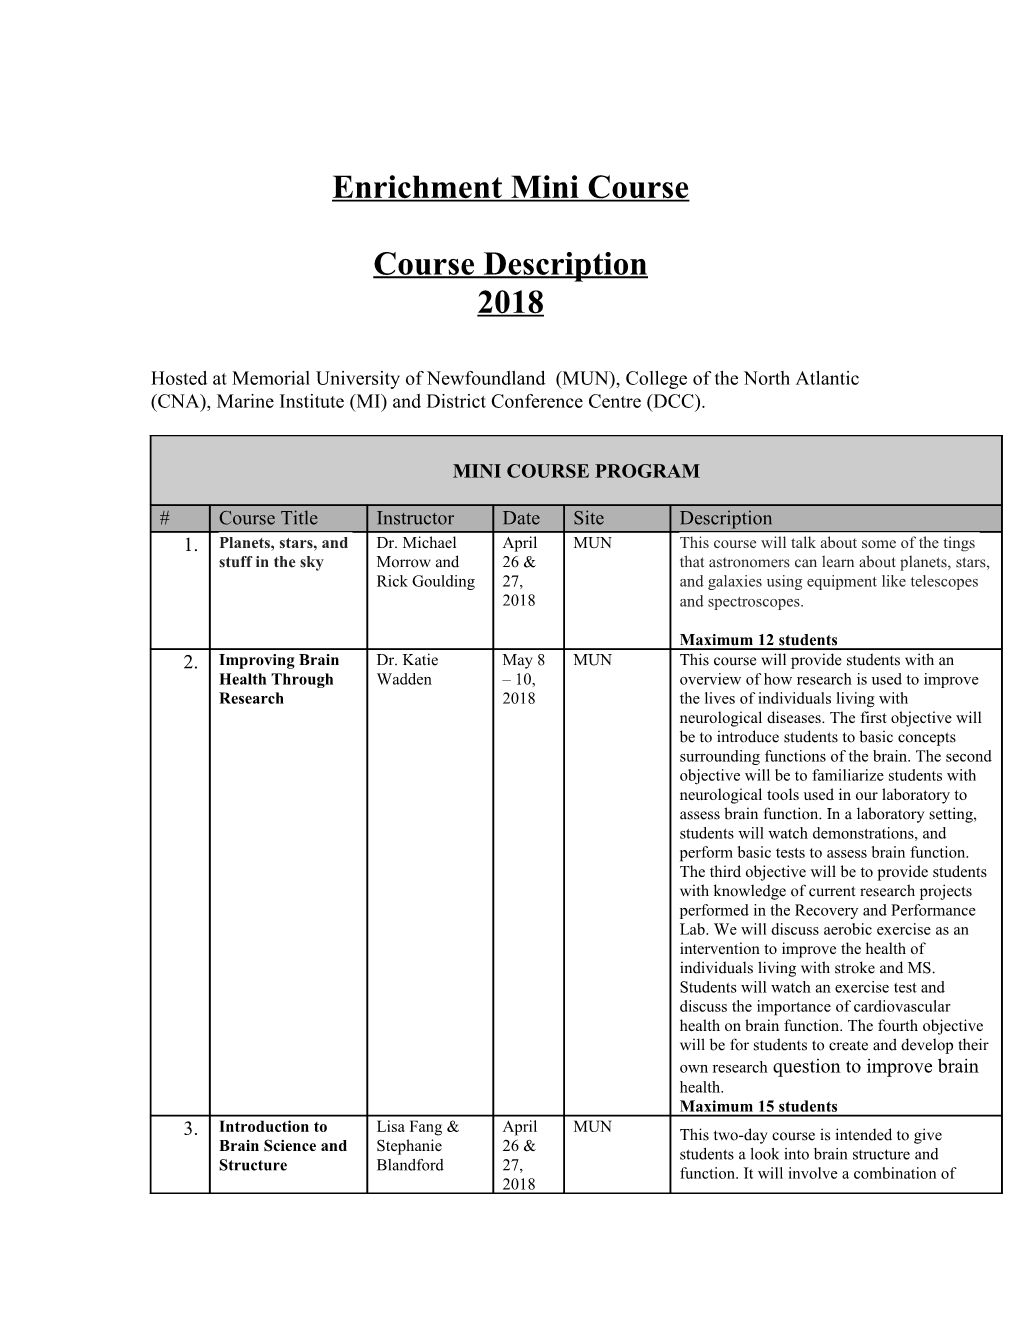 Enrichment Mini-Course